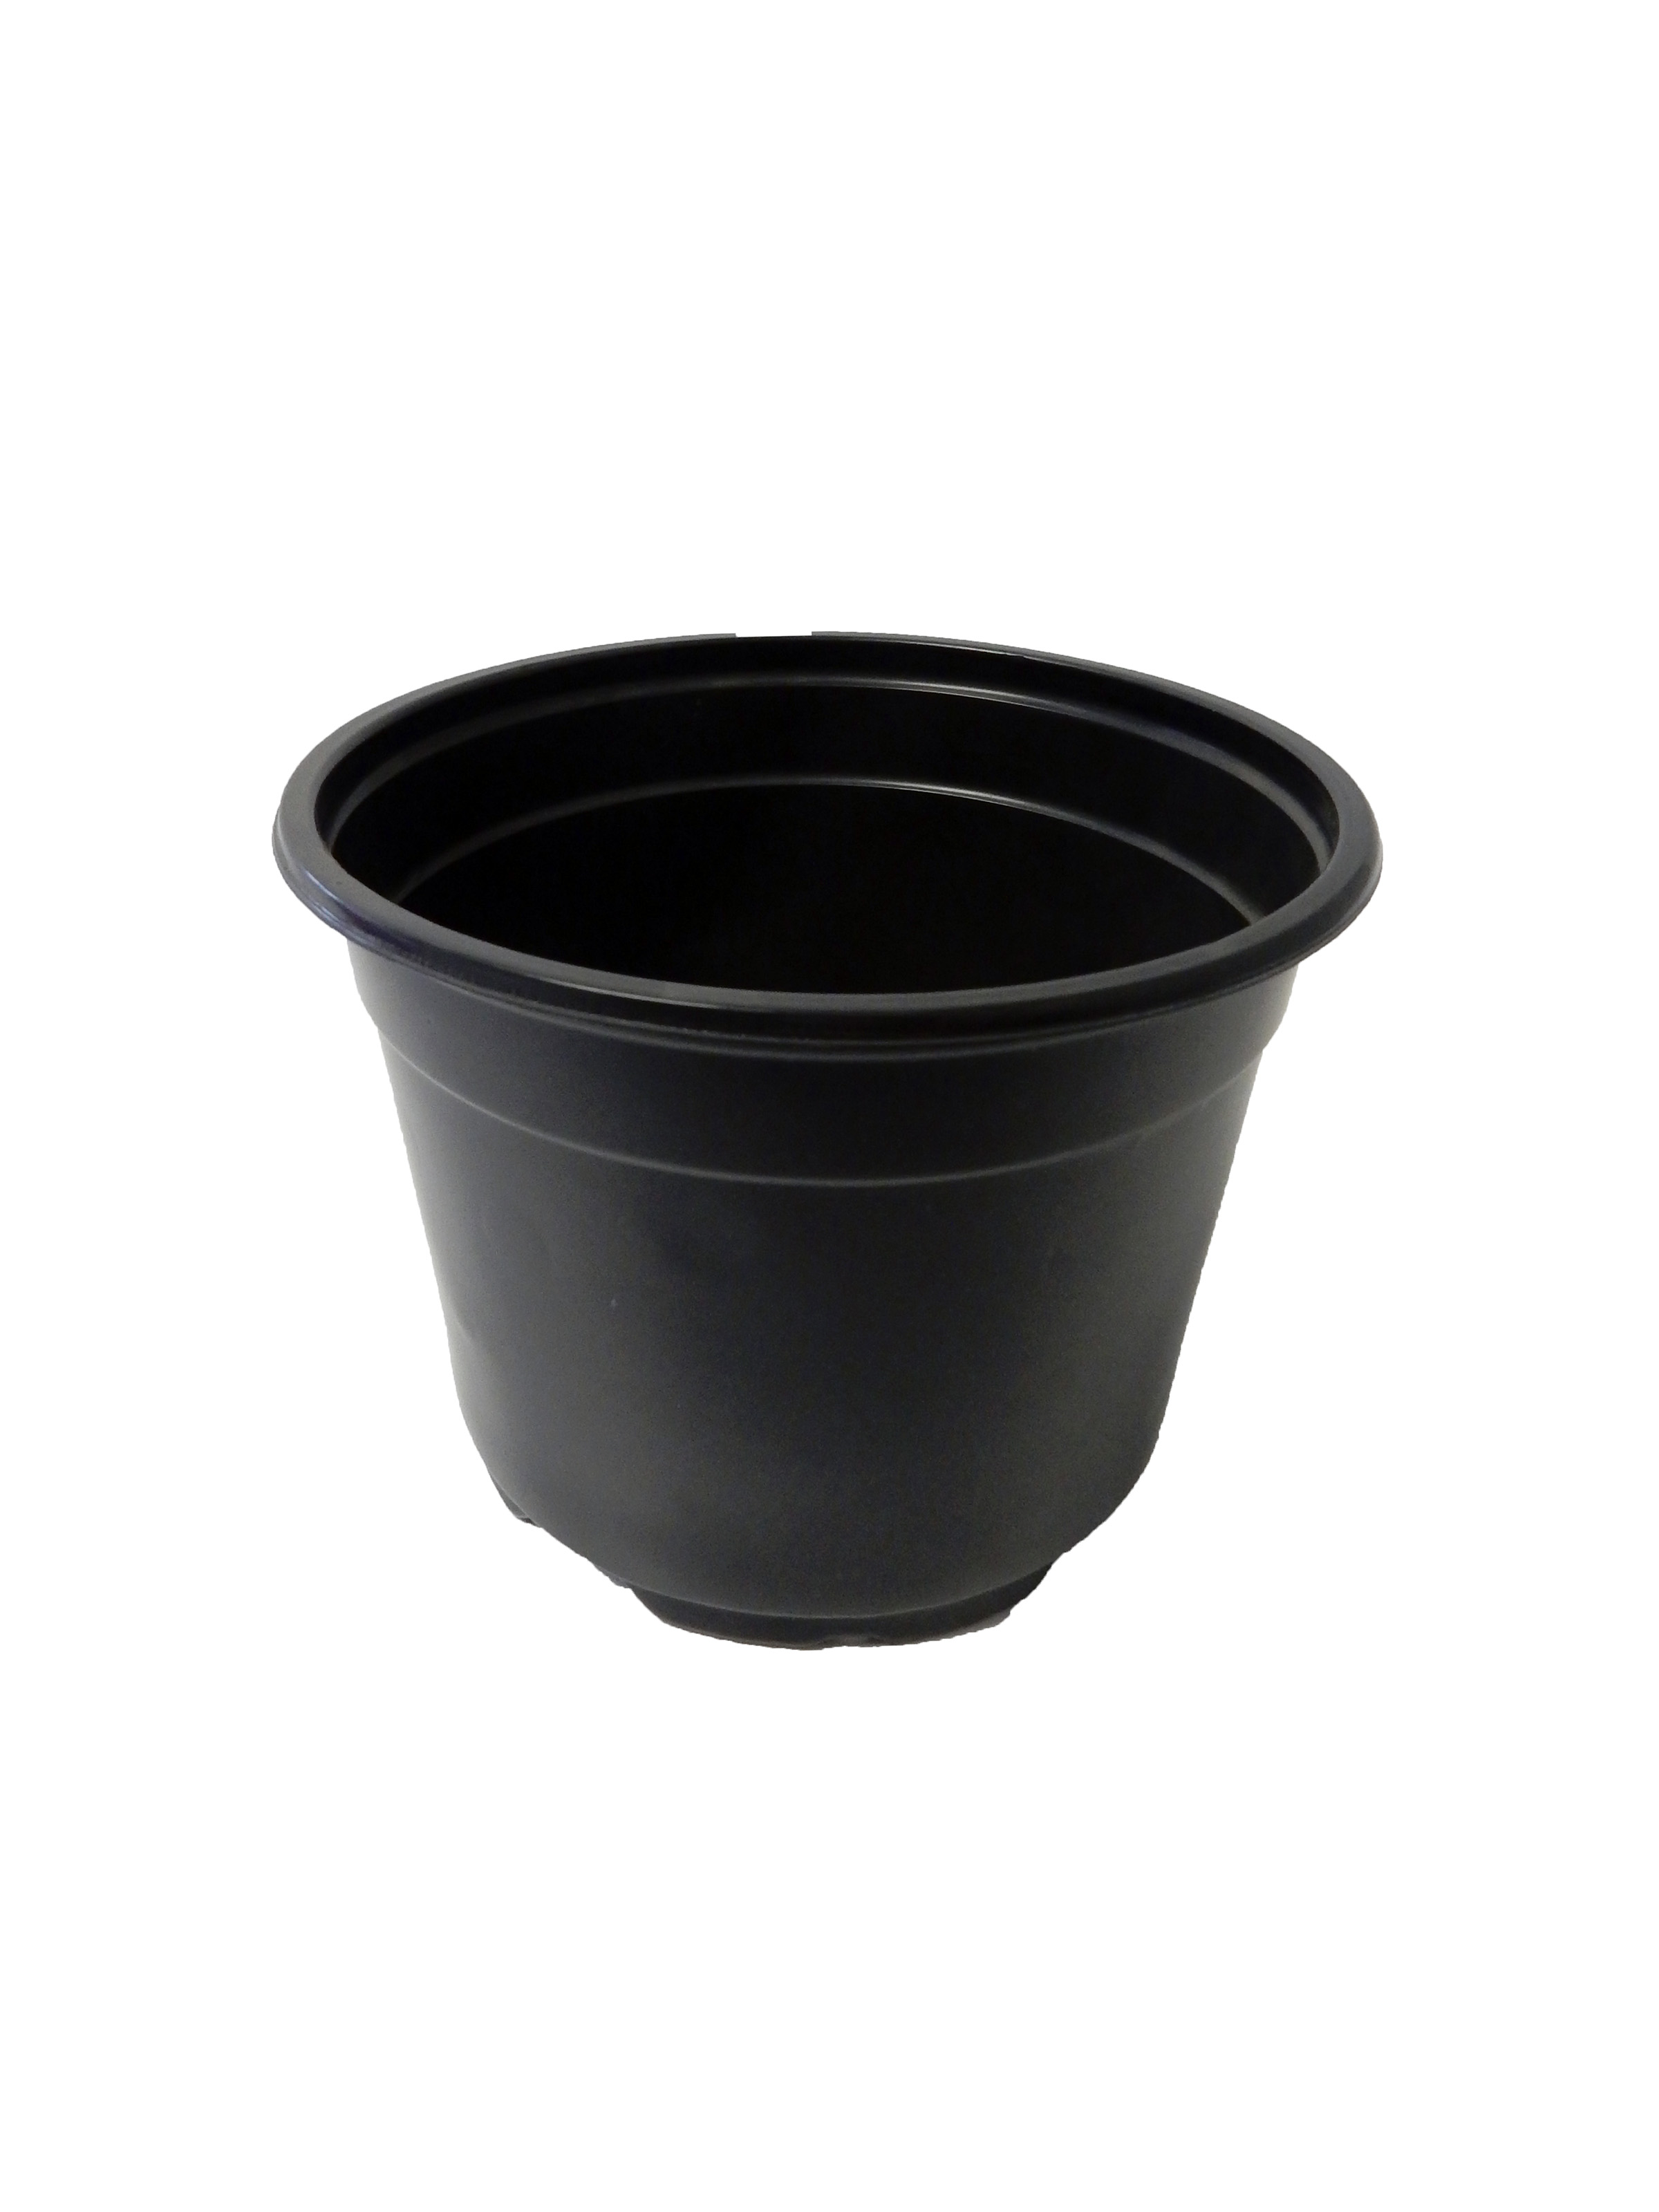 17 cm Euro Pot Coex Short Black/Black - 300 per case - Mum Pans